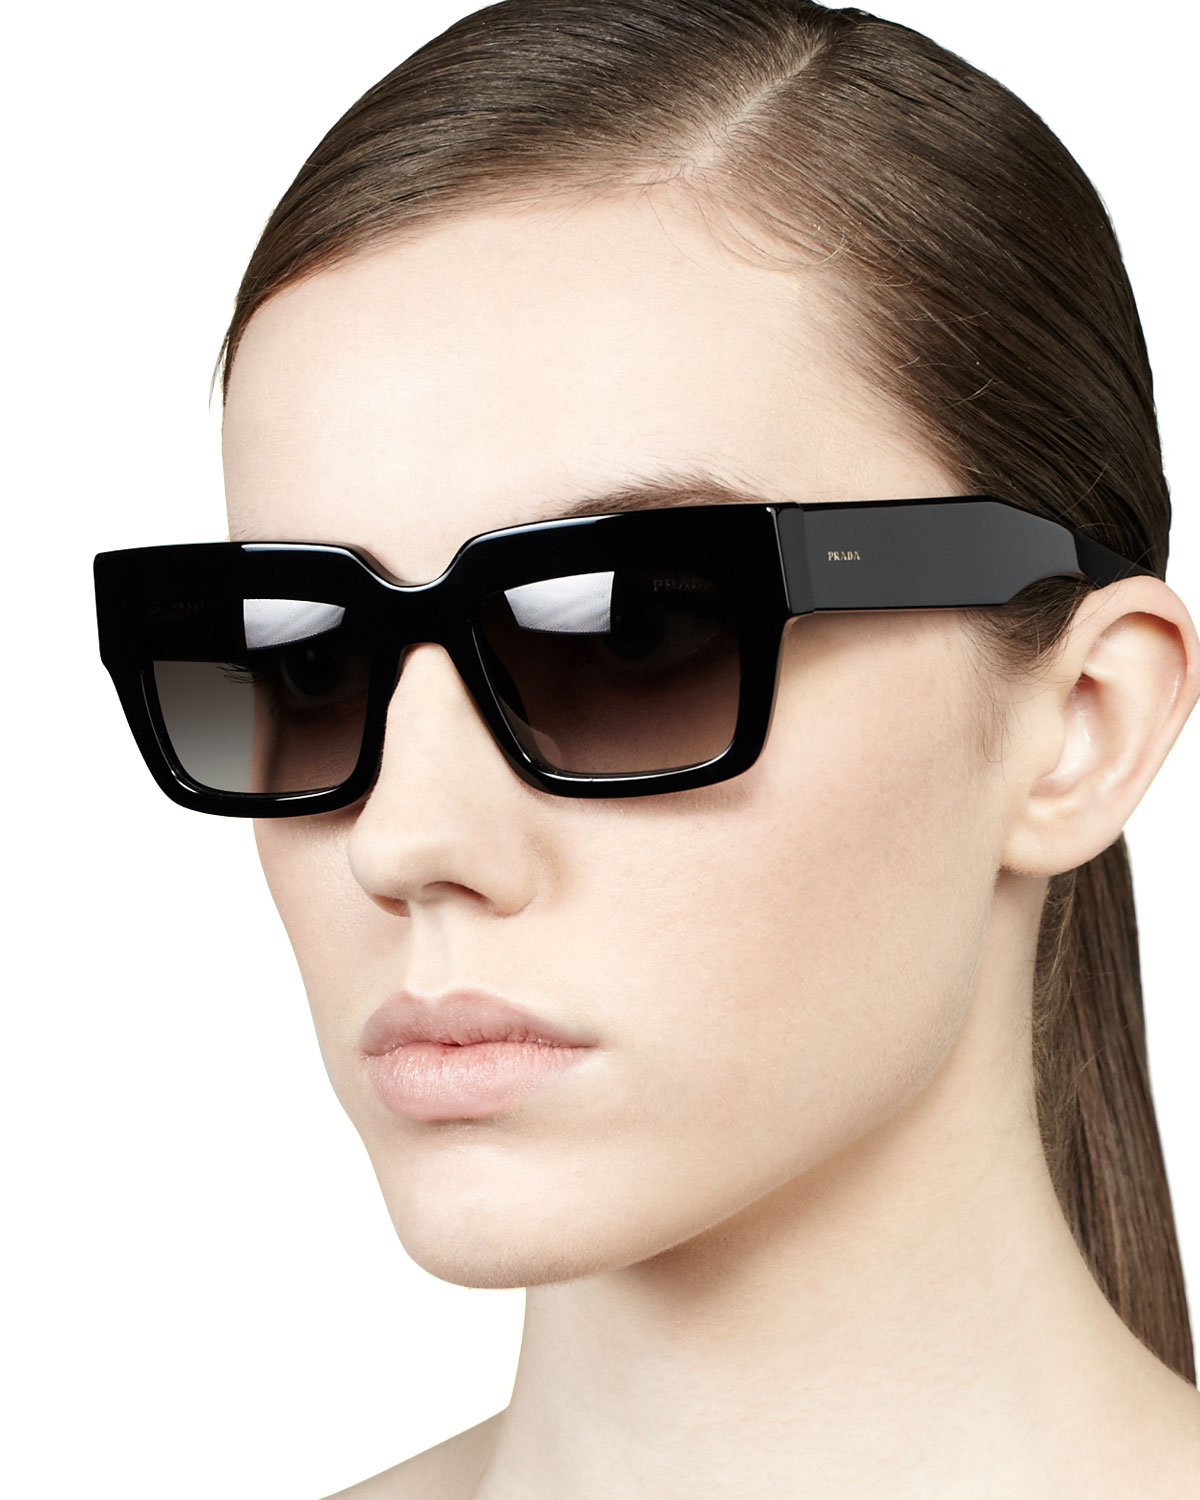 prada black square sunglasses